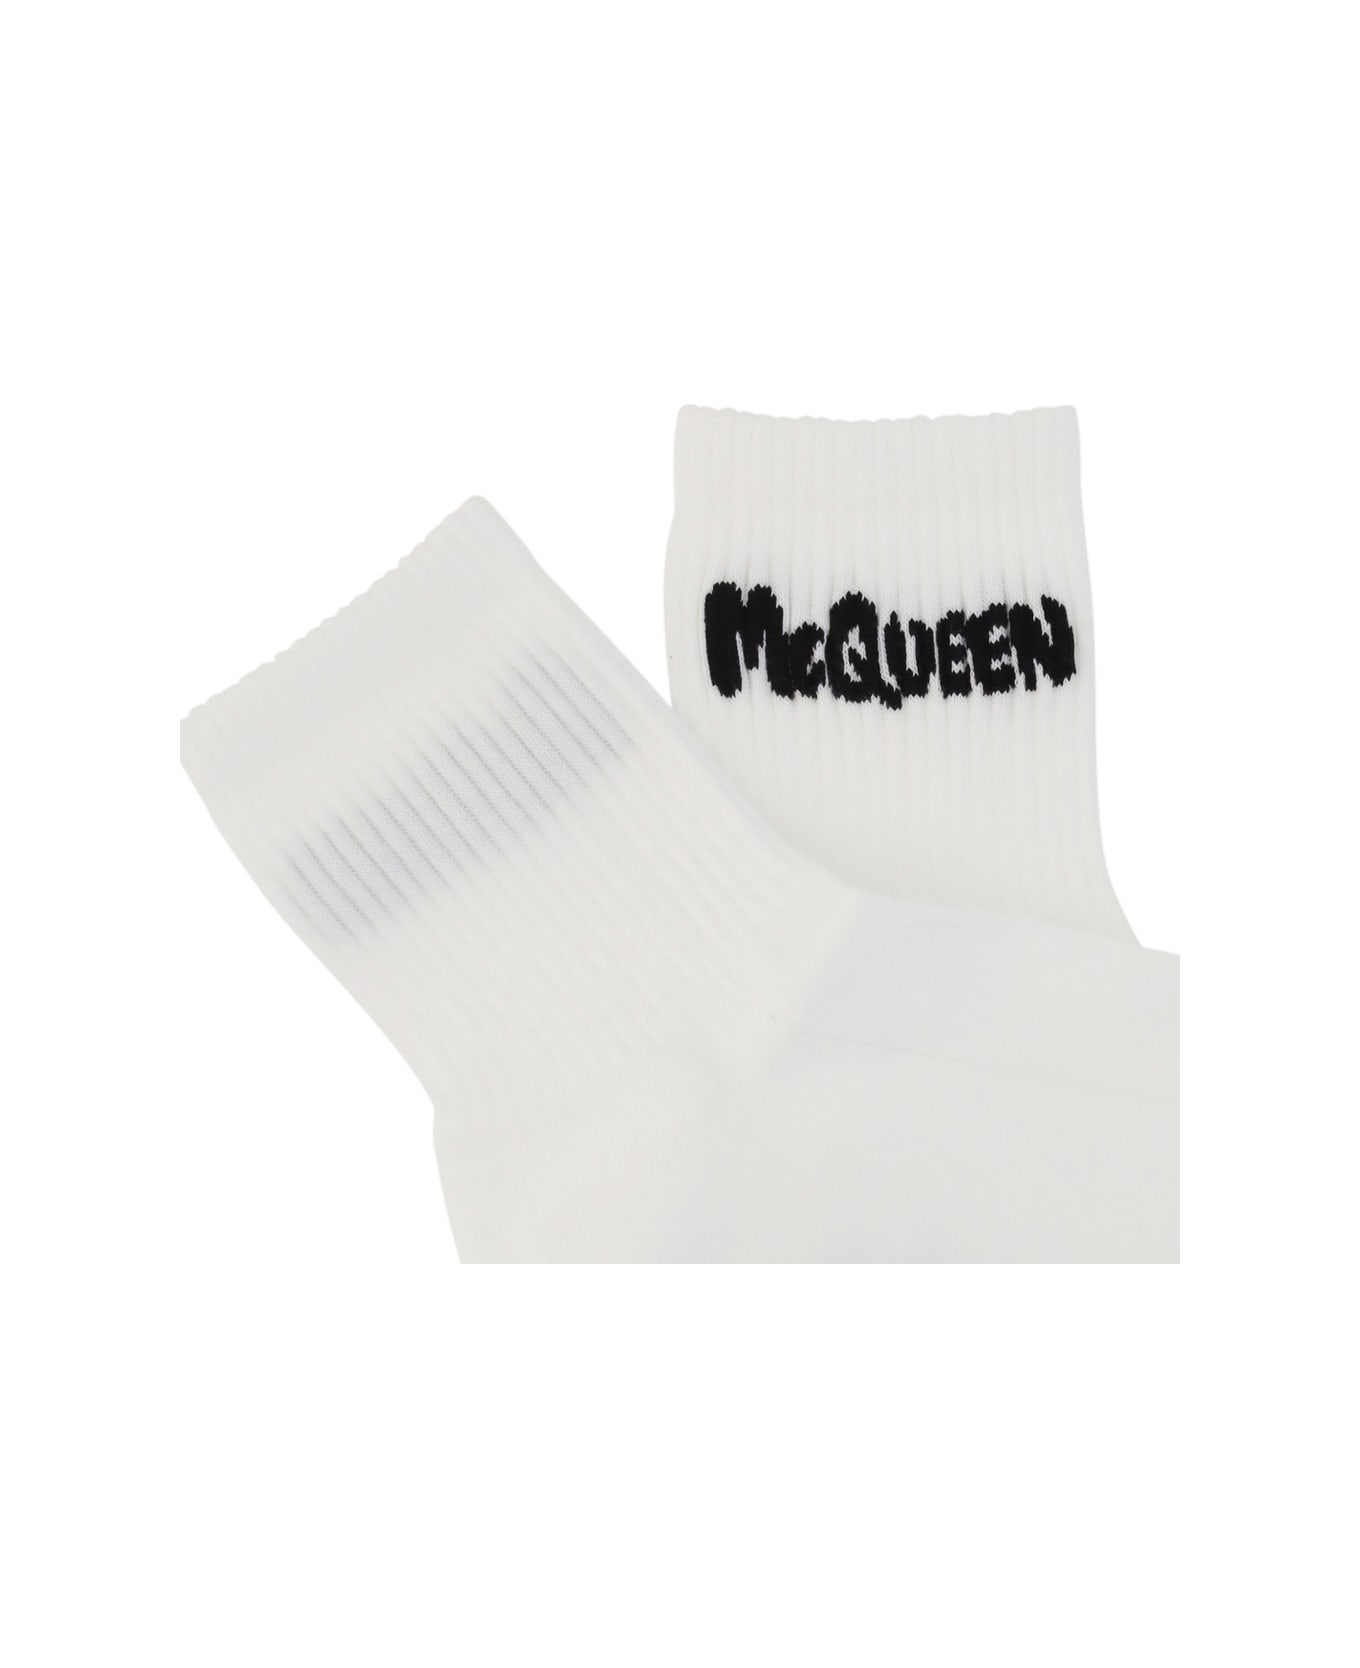 Alexander McQueen Graffiti Socks - Bianco